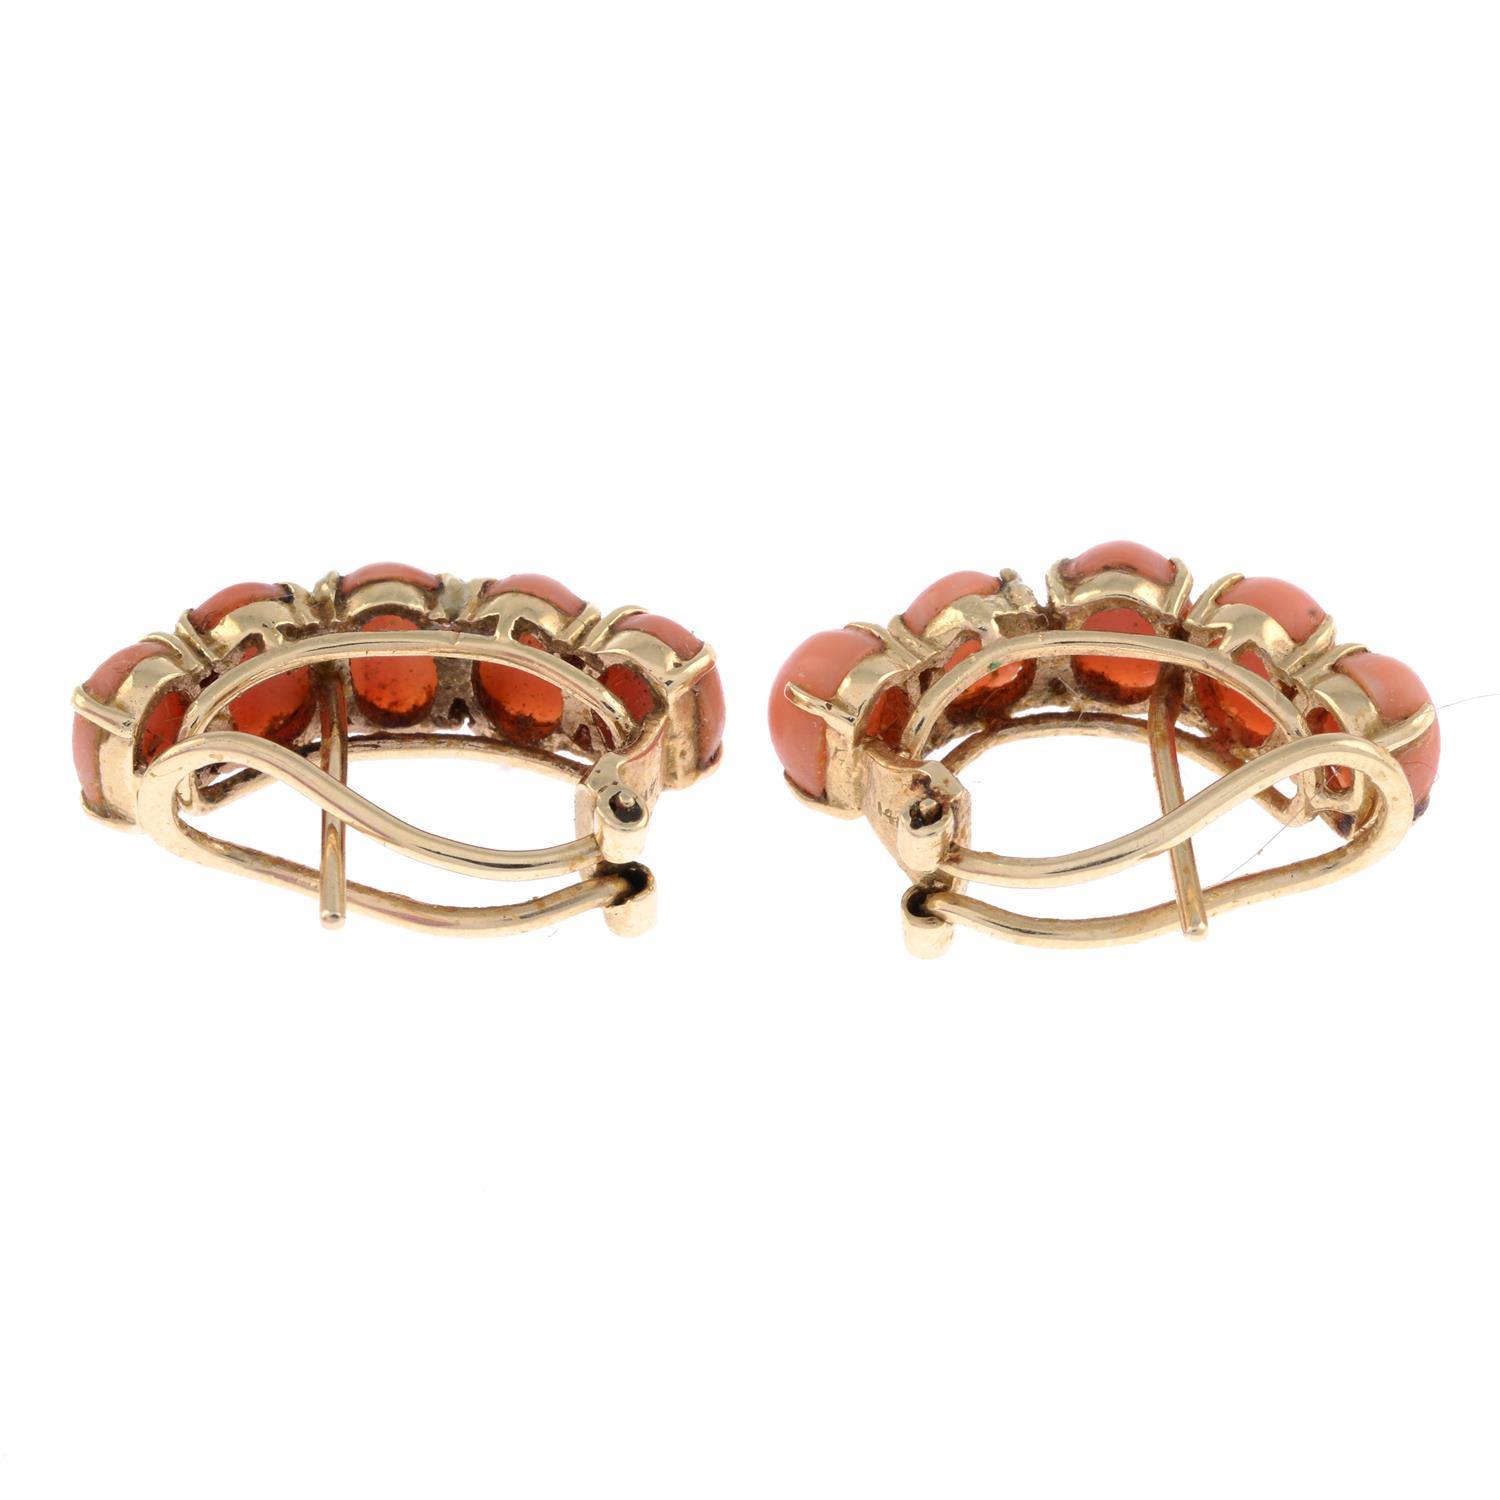 Coral earrings - Image 2 of 2